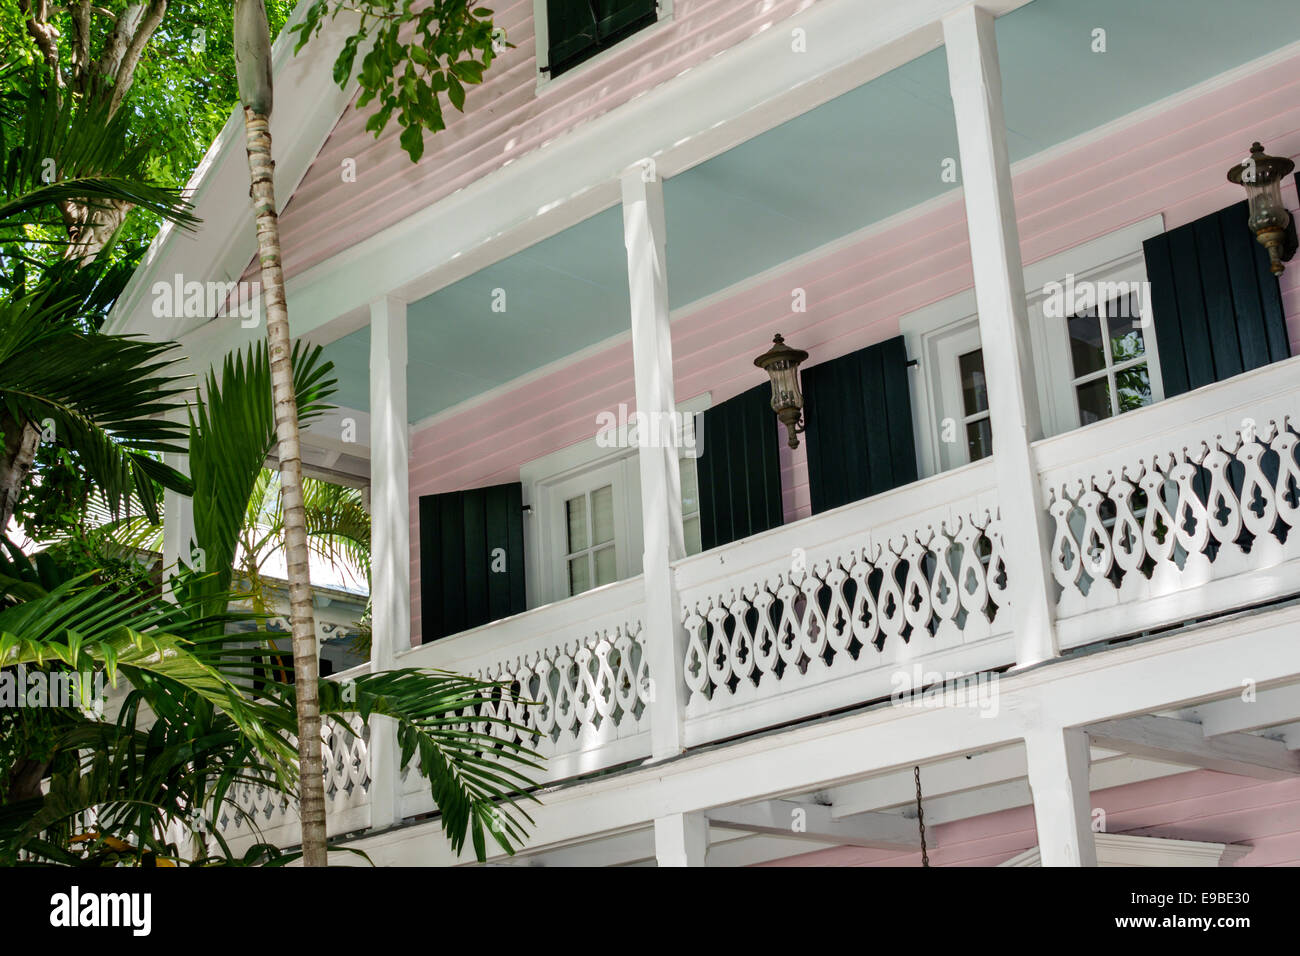 Key West Florida, Keys Caroline Street, Haushäuser Häuser Häuser Häuser Residenz, Haus, Balkon, Holzverkleidung, tropische Landschaftsgestaltung Vegetation, Pflanzen, Bäume, vis Stockfoto